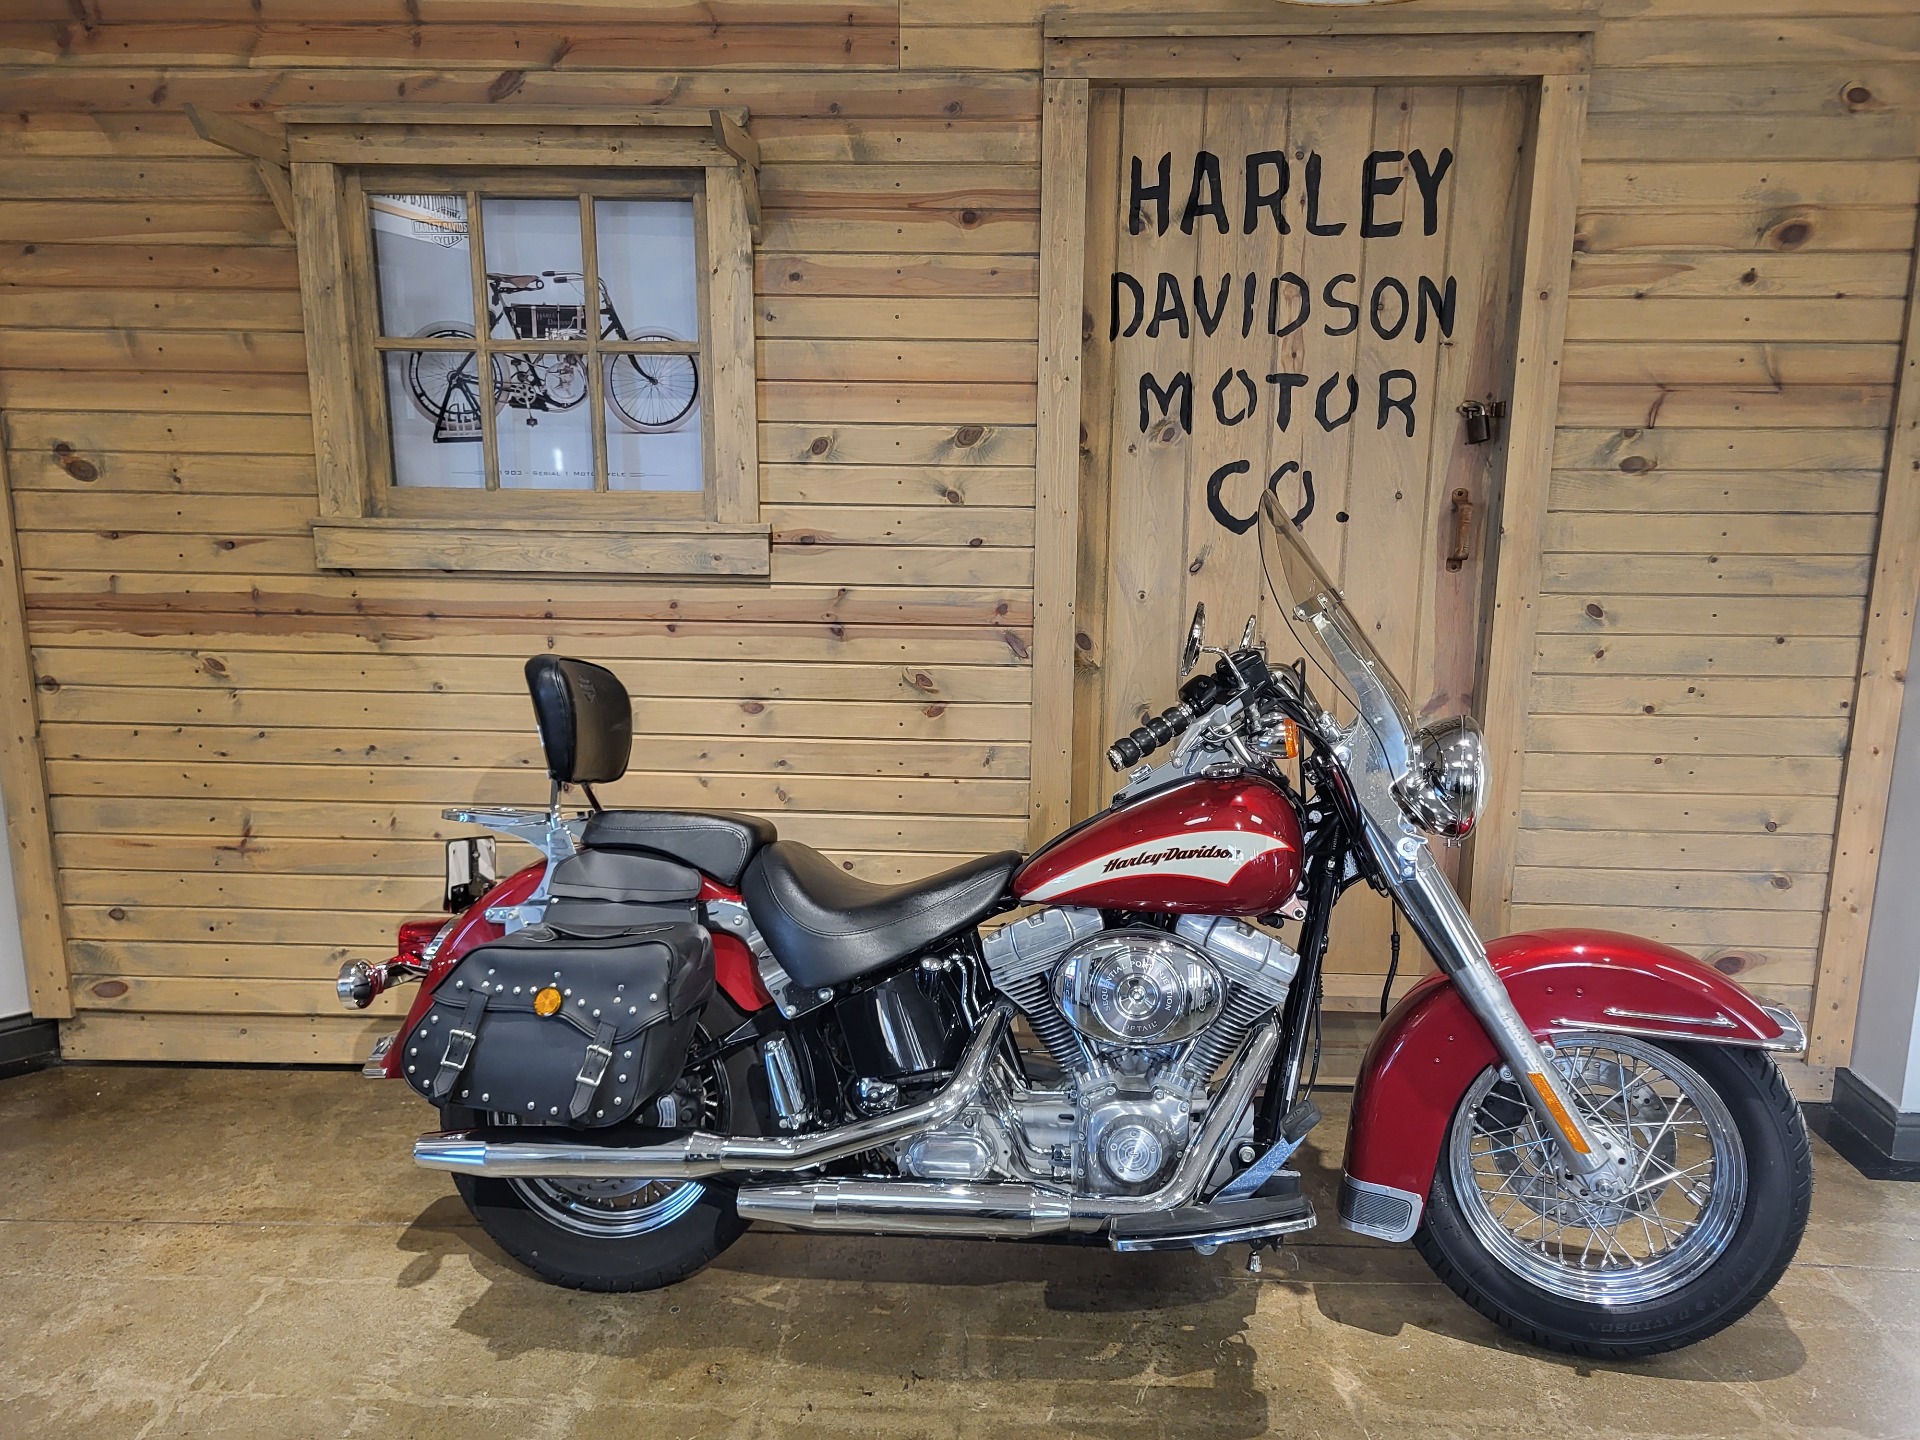 2006 Harley-Davidson Heritage Softail® in Mentor, Ohio - Photo 1